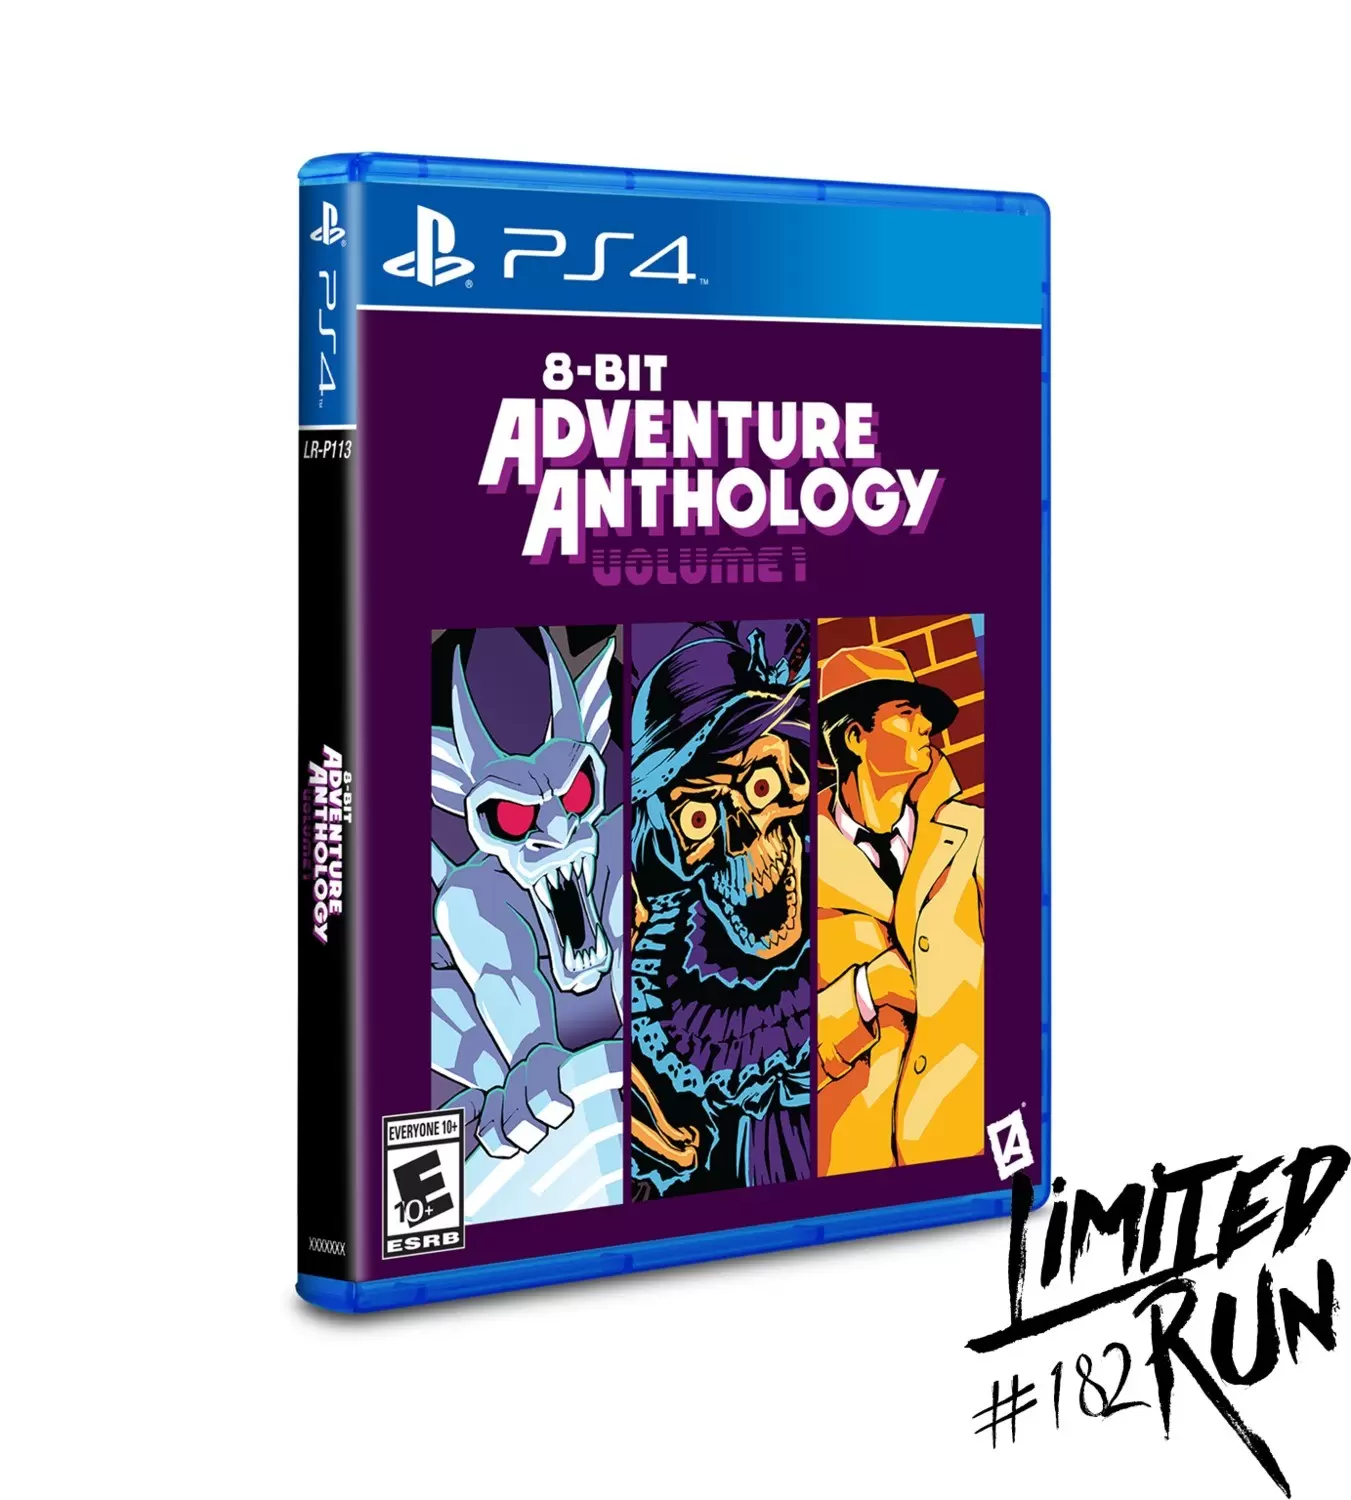 PS4 Games - 8-BIT Adventure Anthology